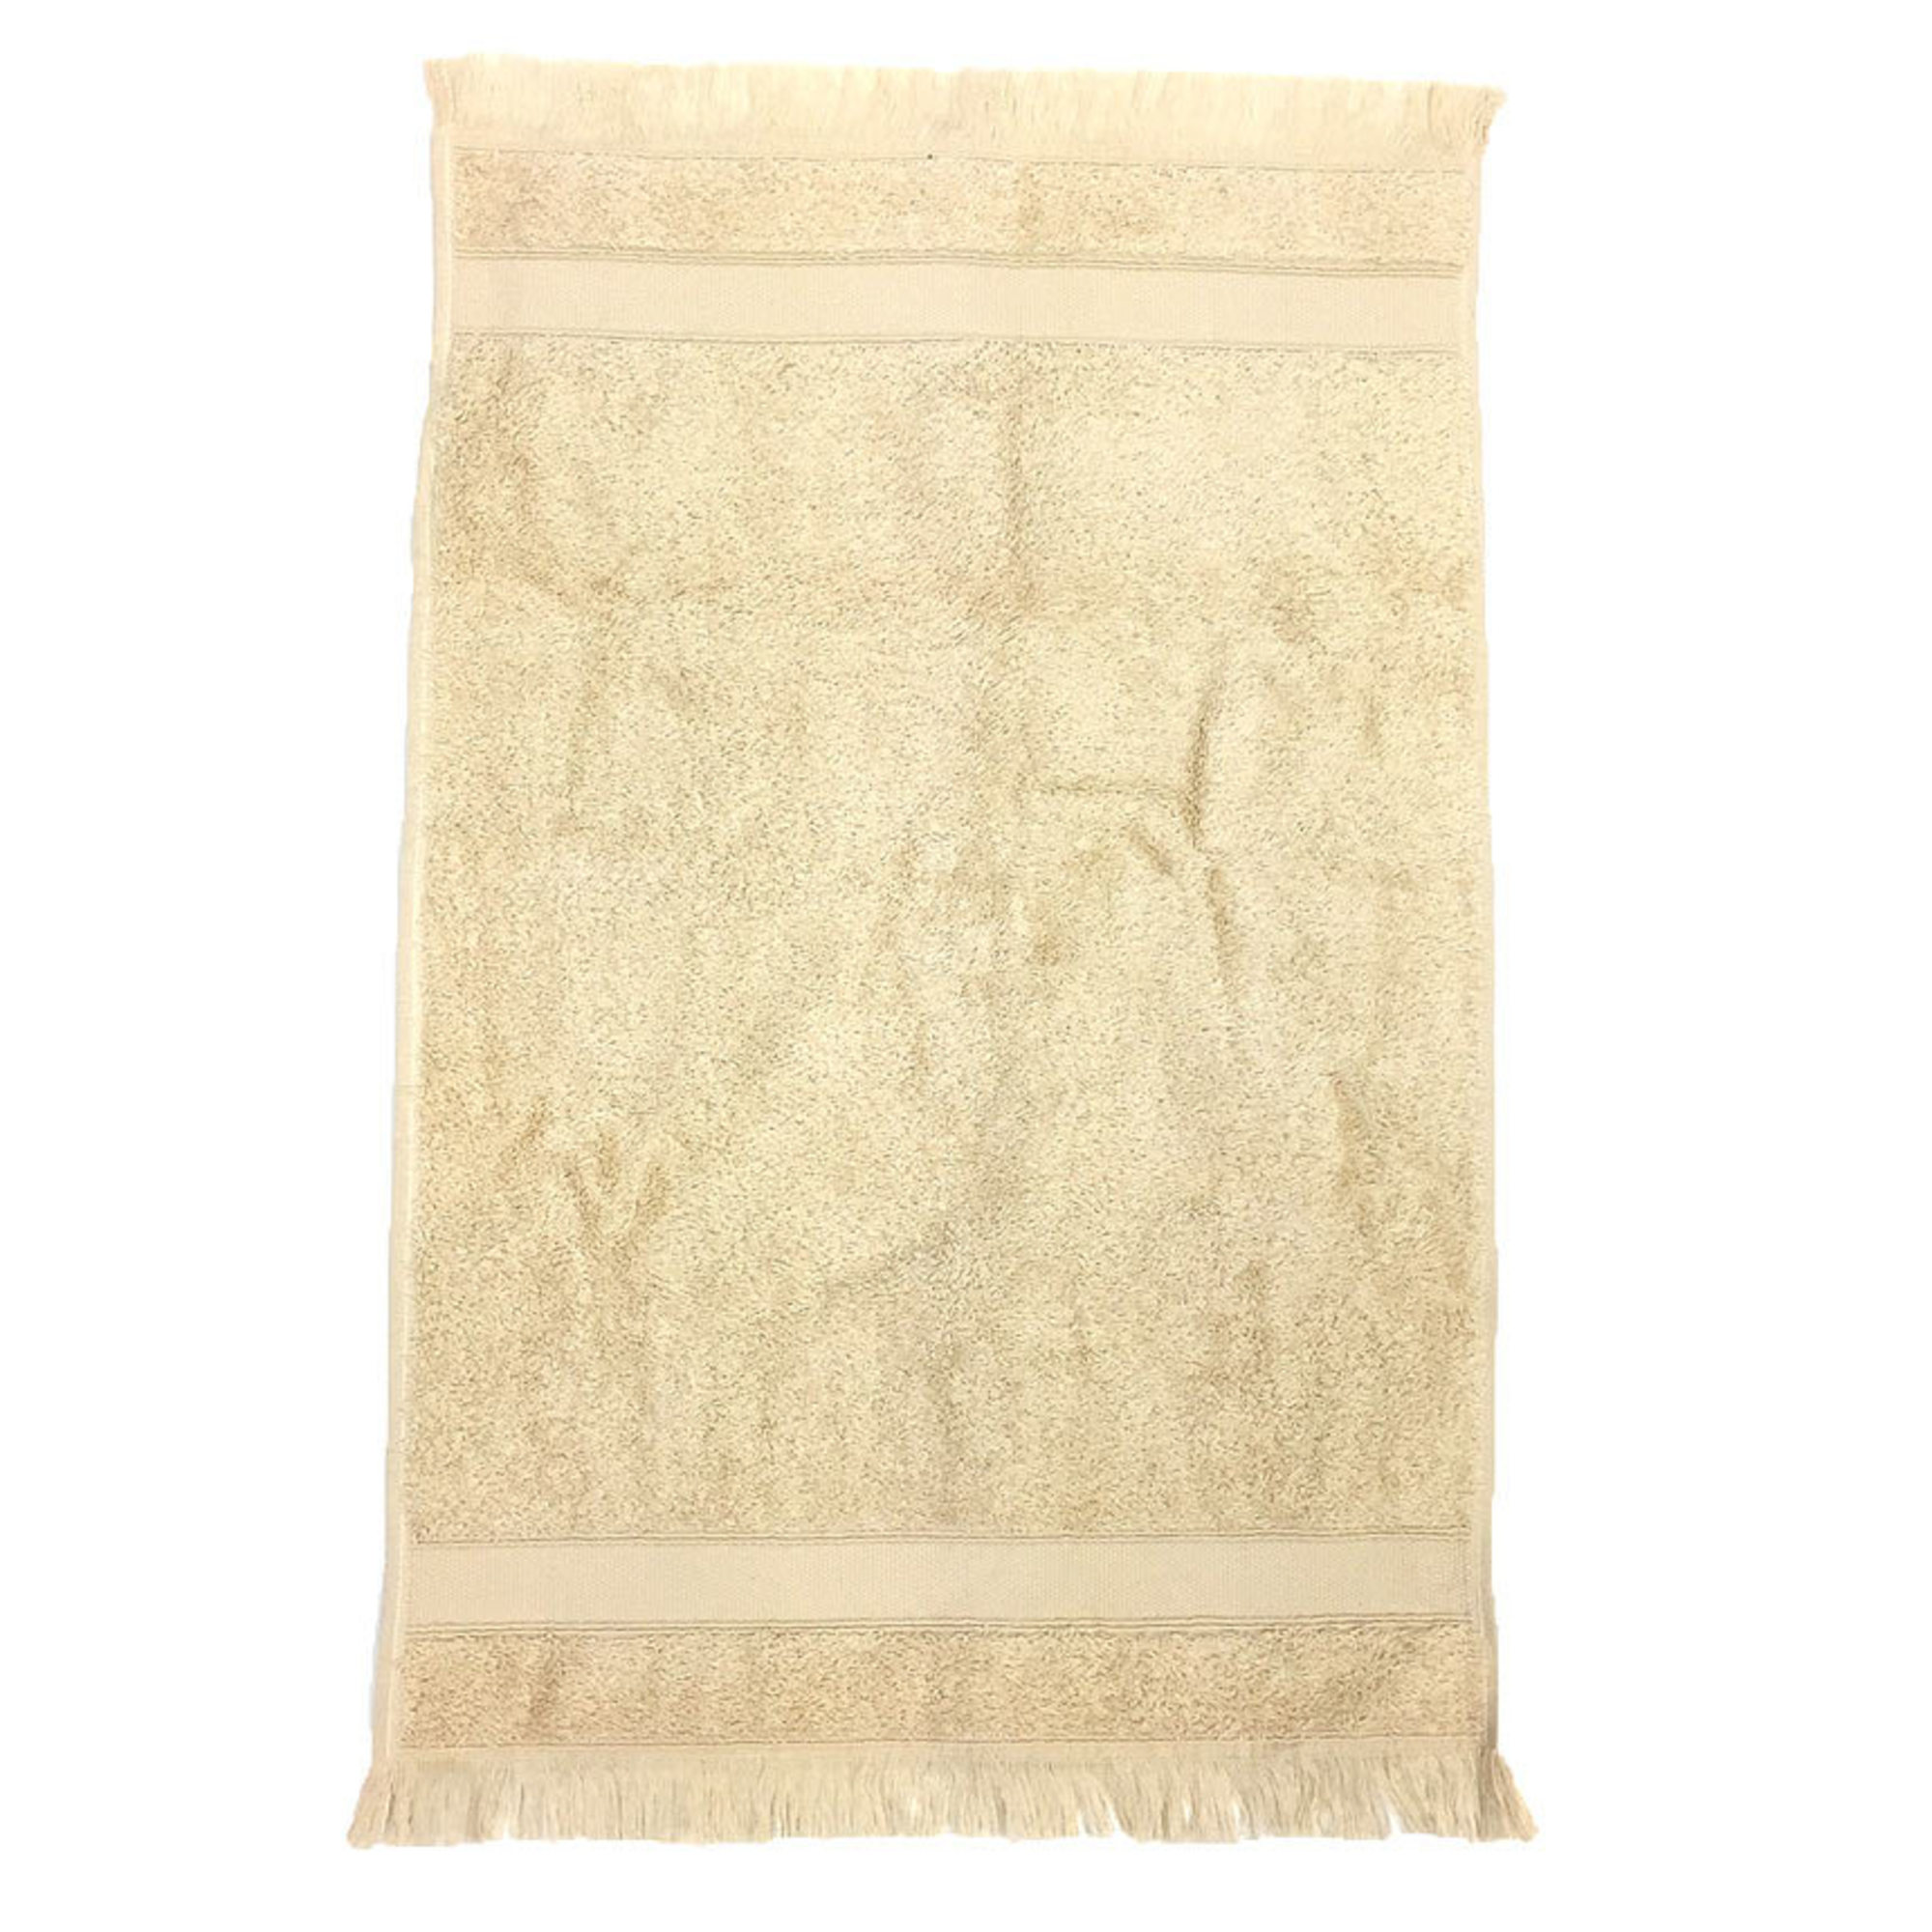 HERMES Face Towel SERVIETTE INVITE 100930M 02 Cotton Silk Beige Men Women Unisex